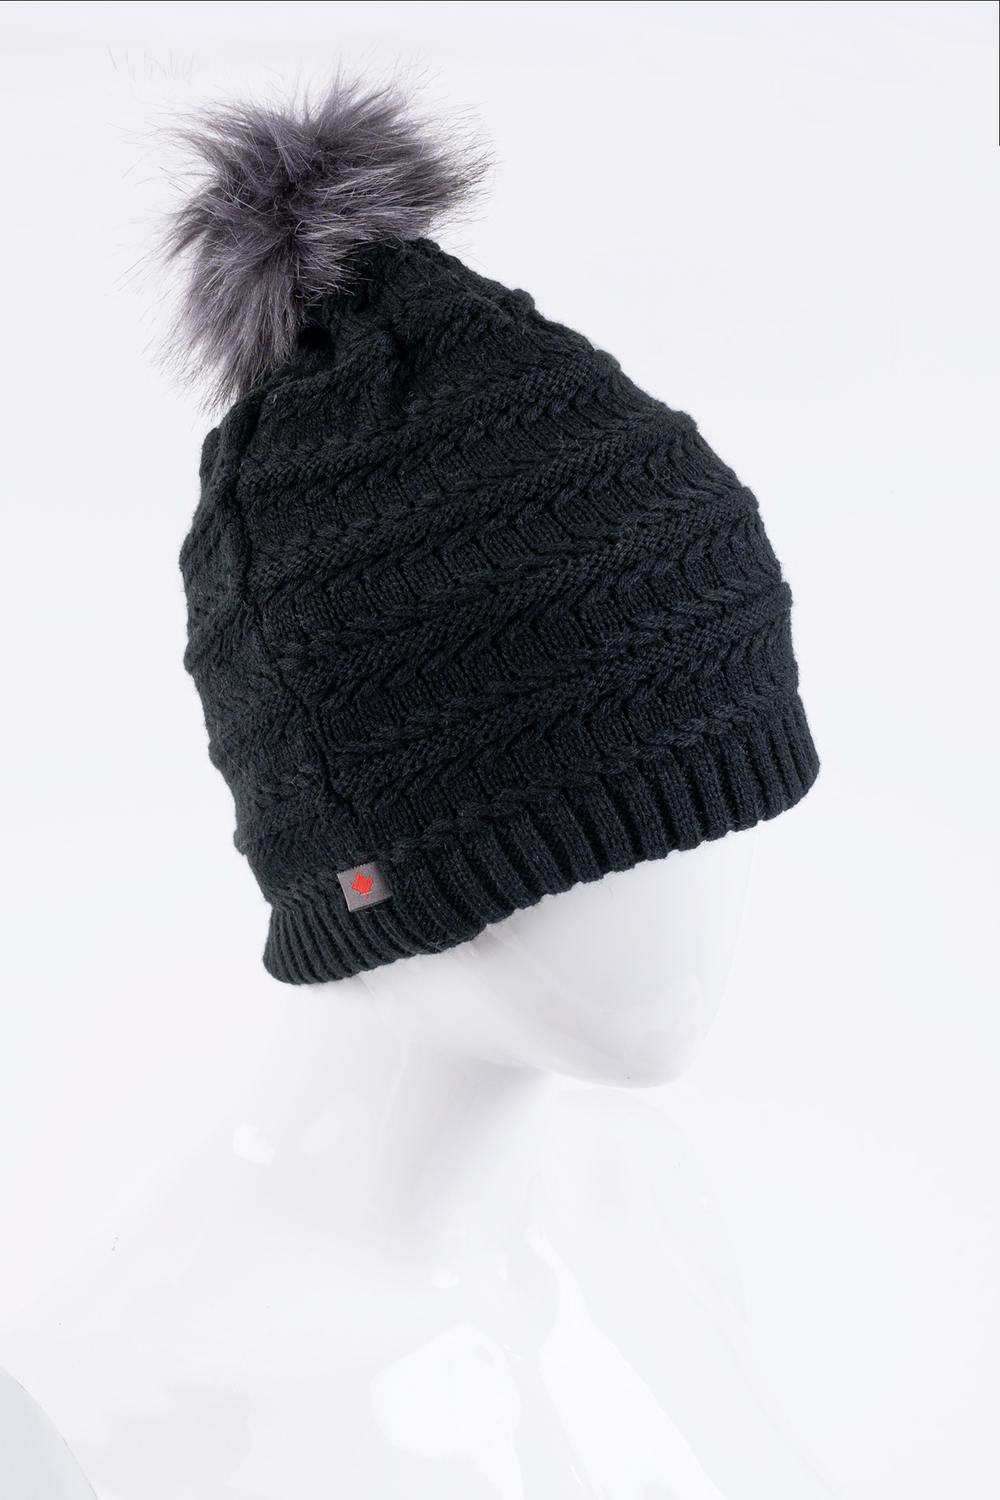 Cable knit, slouchy beanie with faux fur pom pom, black